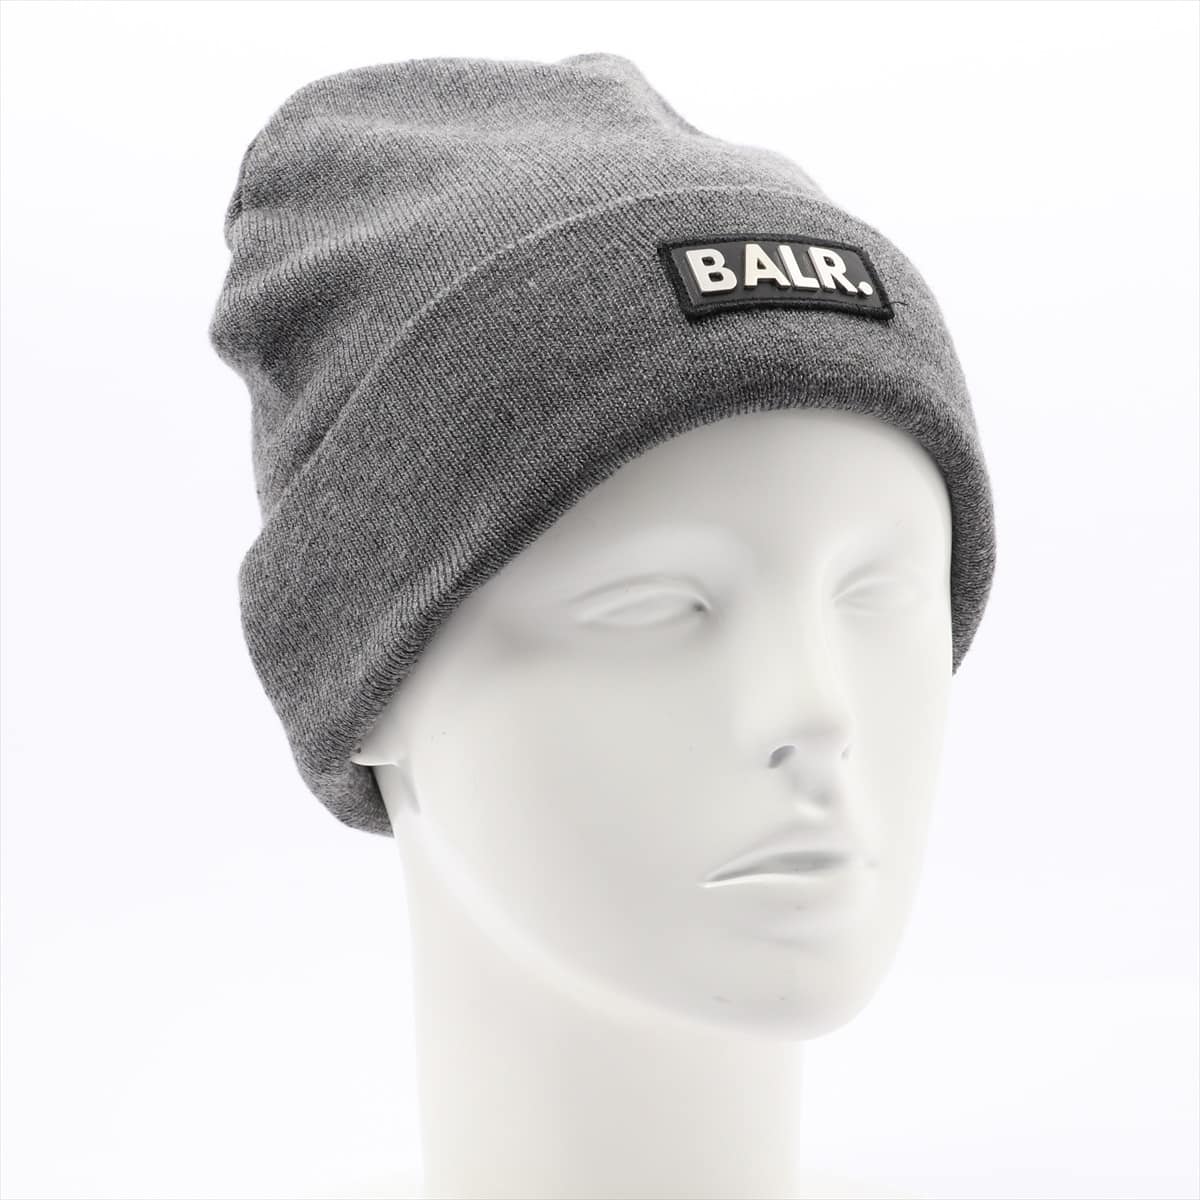 Balr Knit cap Acrylic Grey logo plate